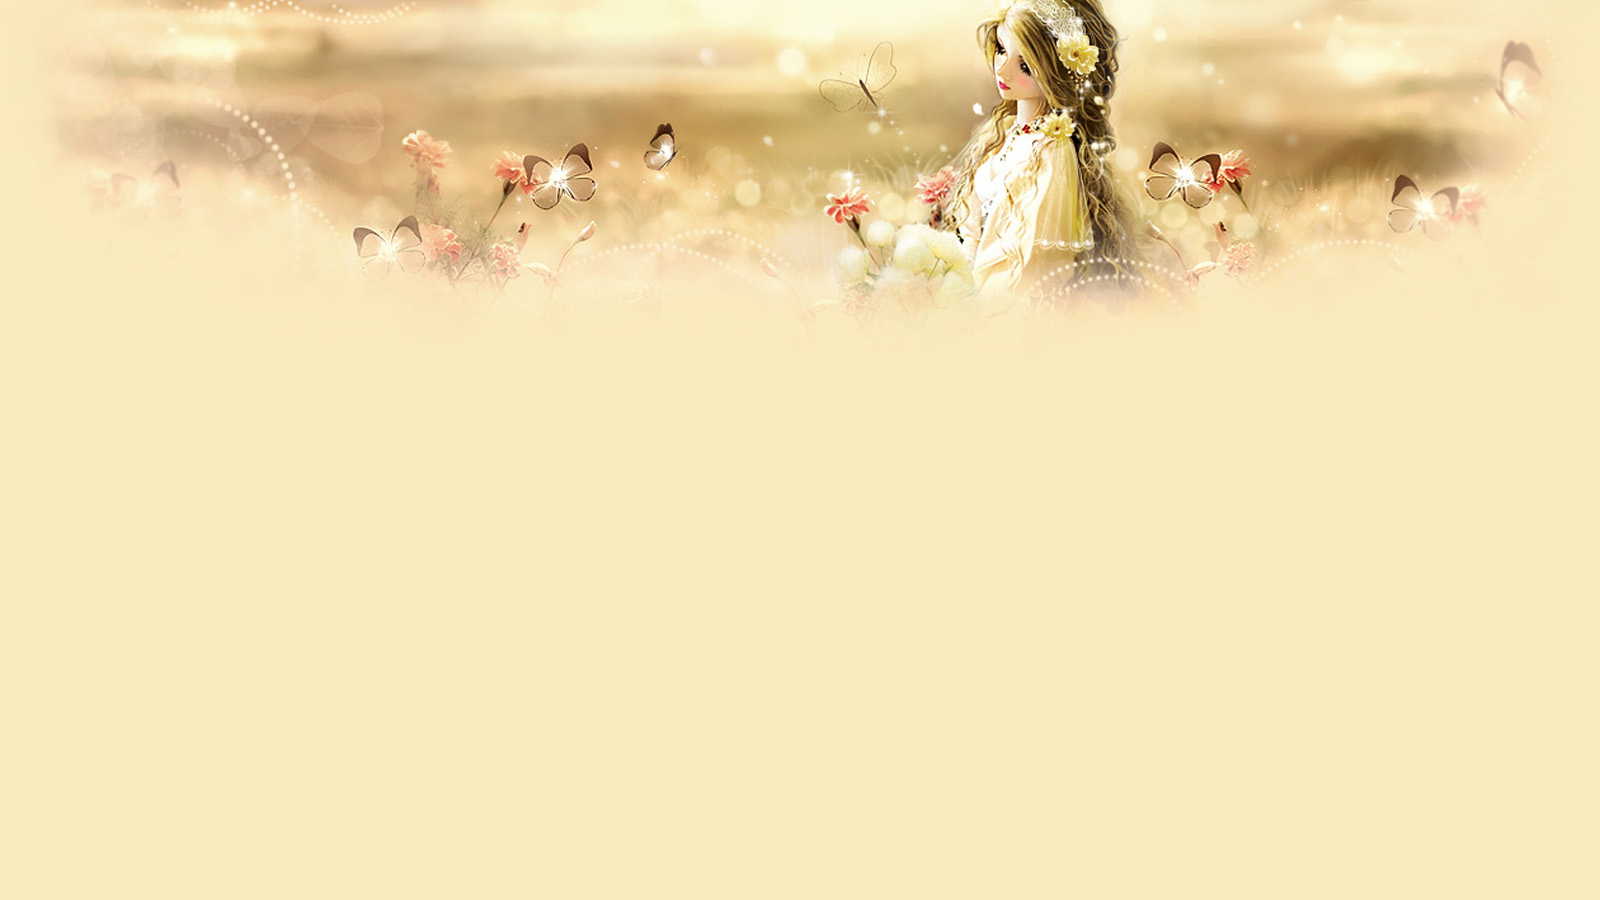 Princess's garden desktop background picture